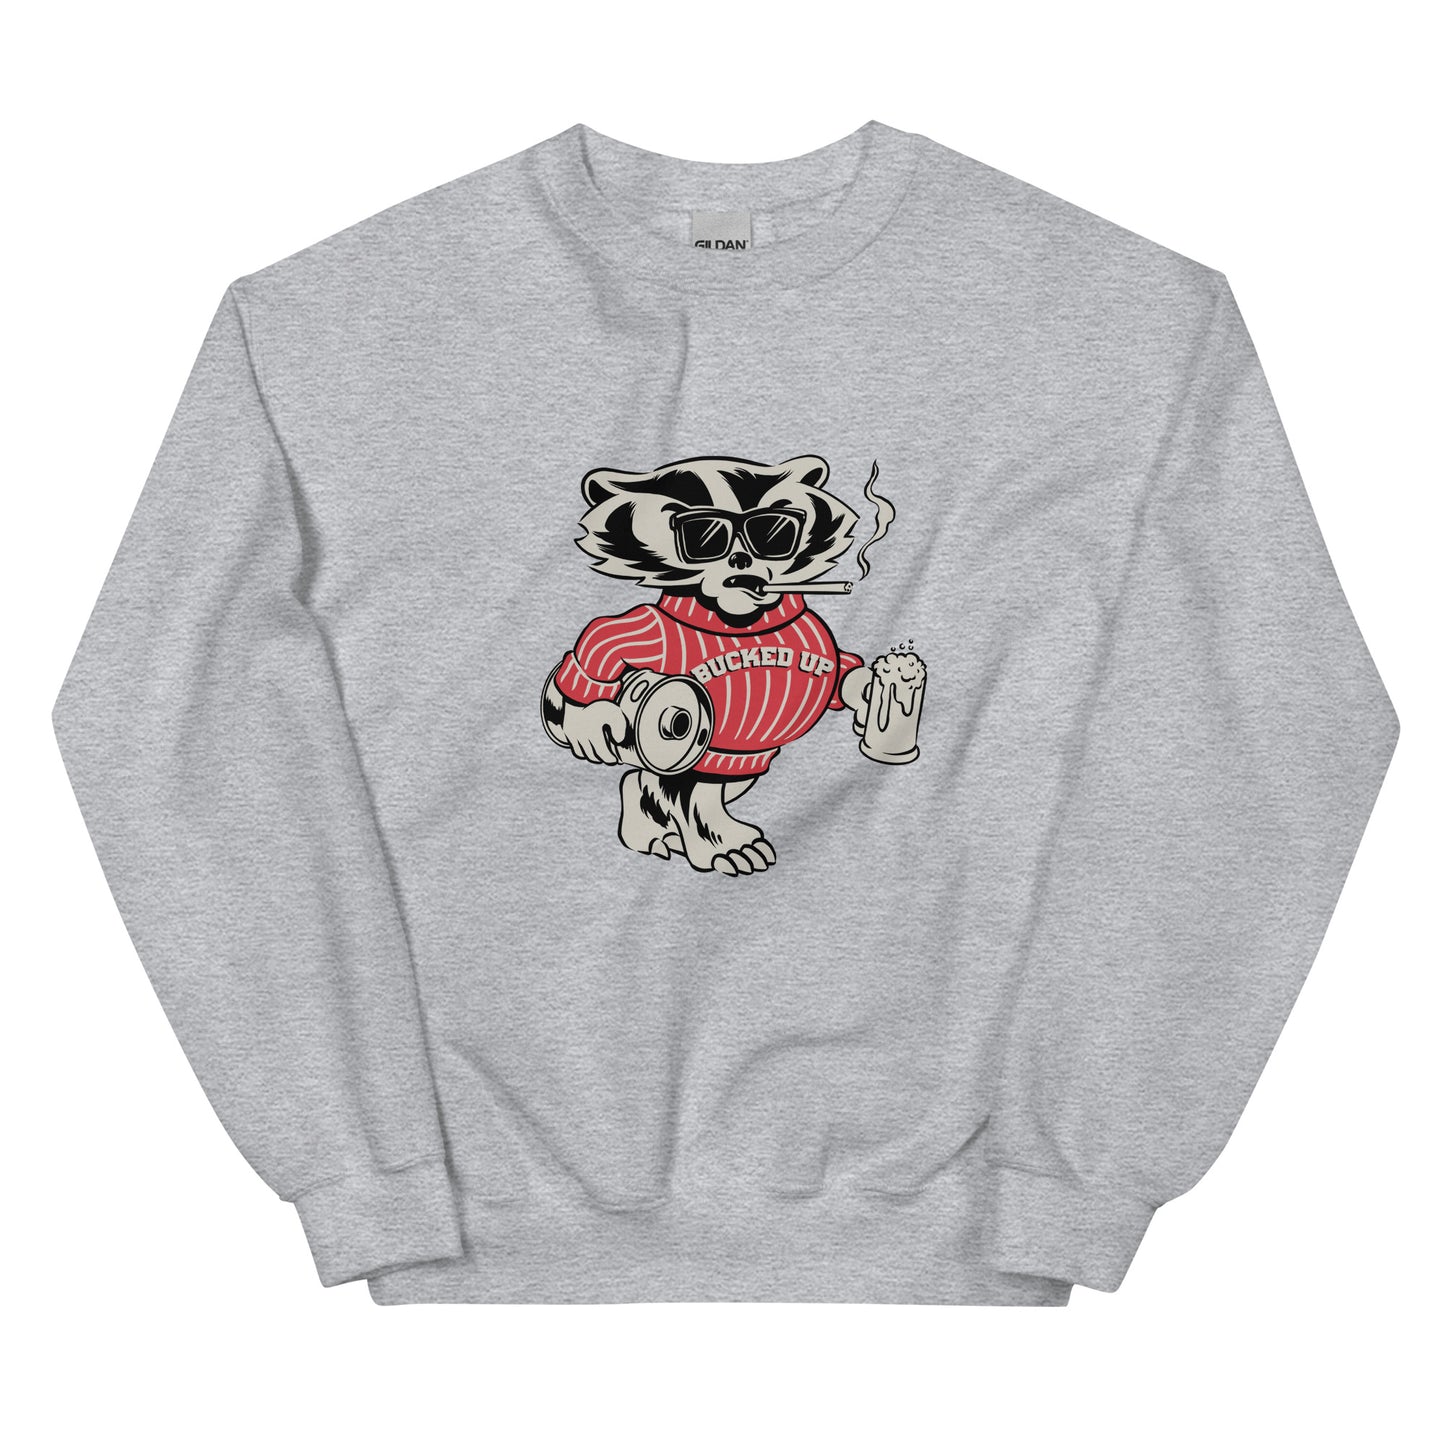 Bucked Up Badger Sweatshirt